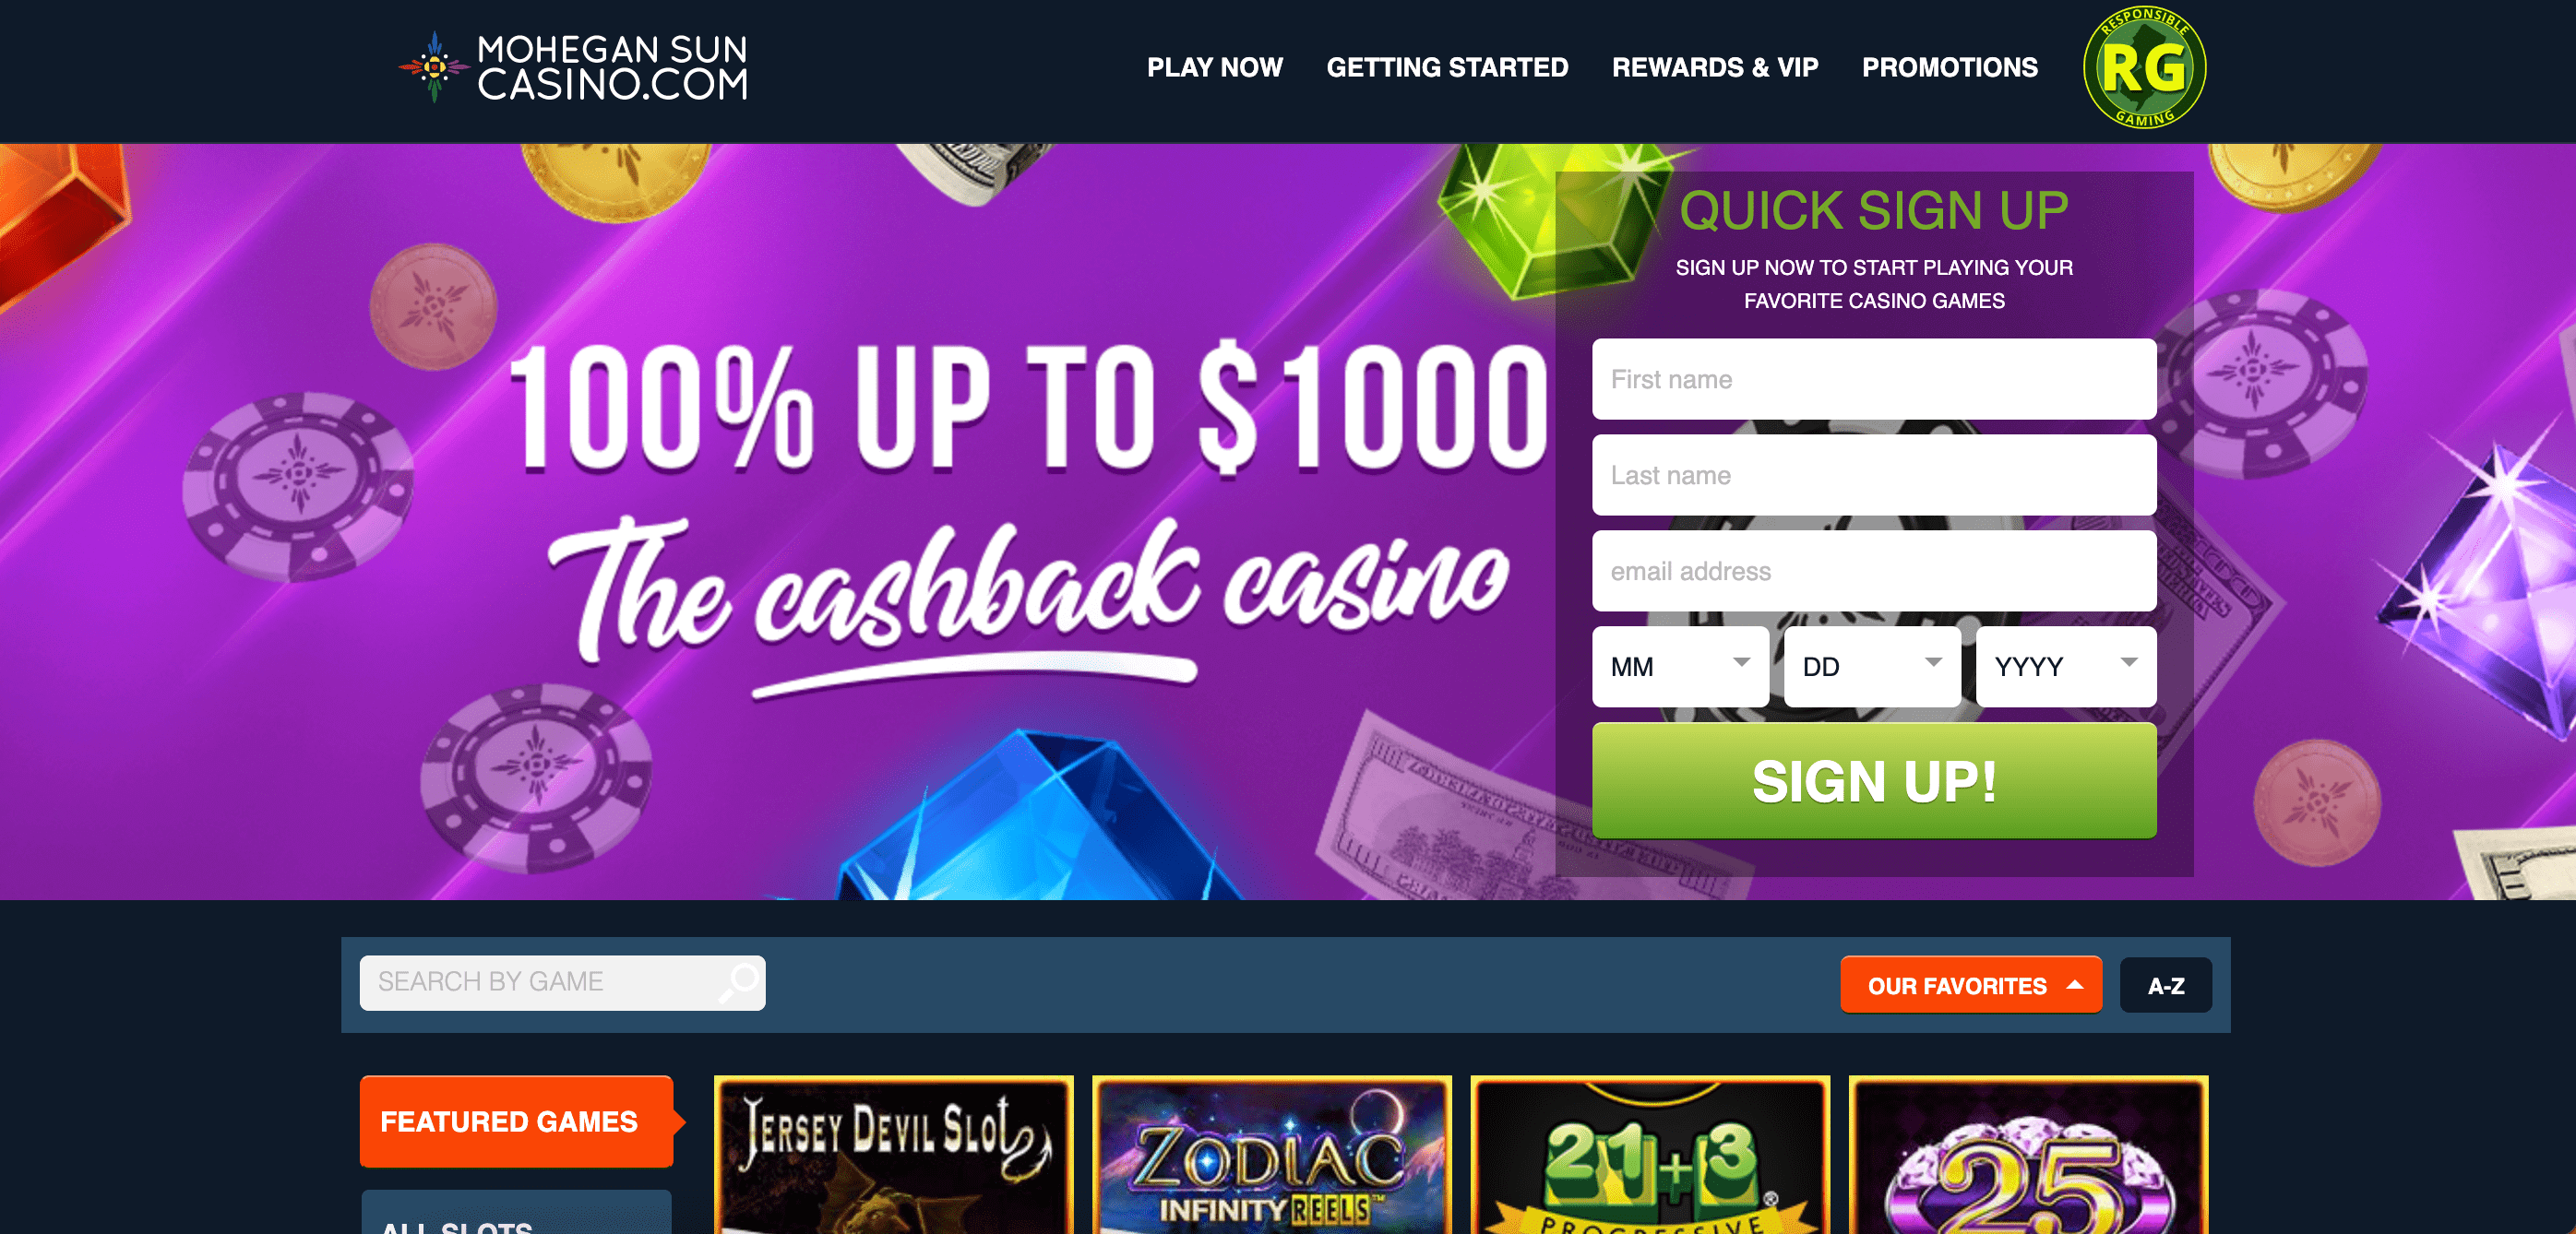 Mohegan Sun Casino NJ Home Page